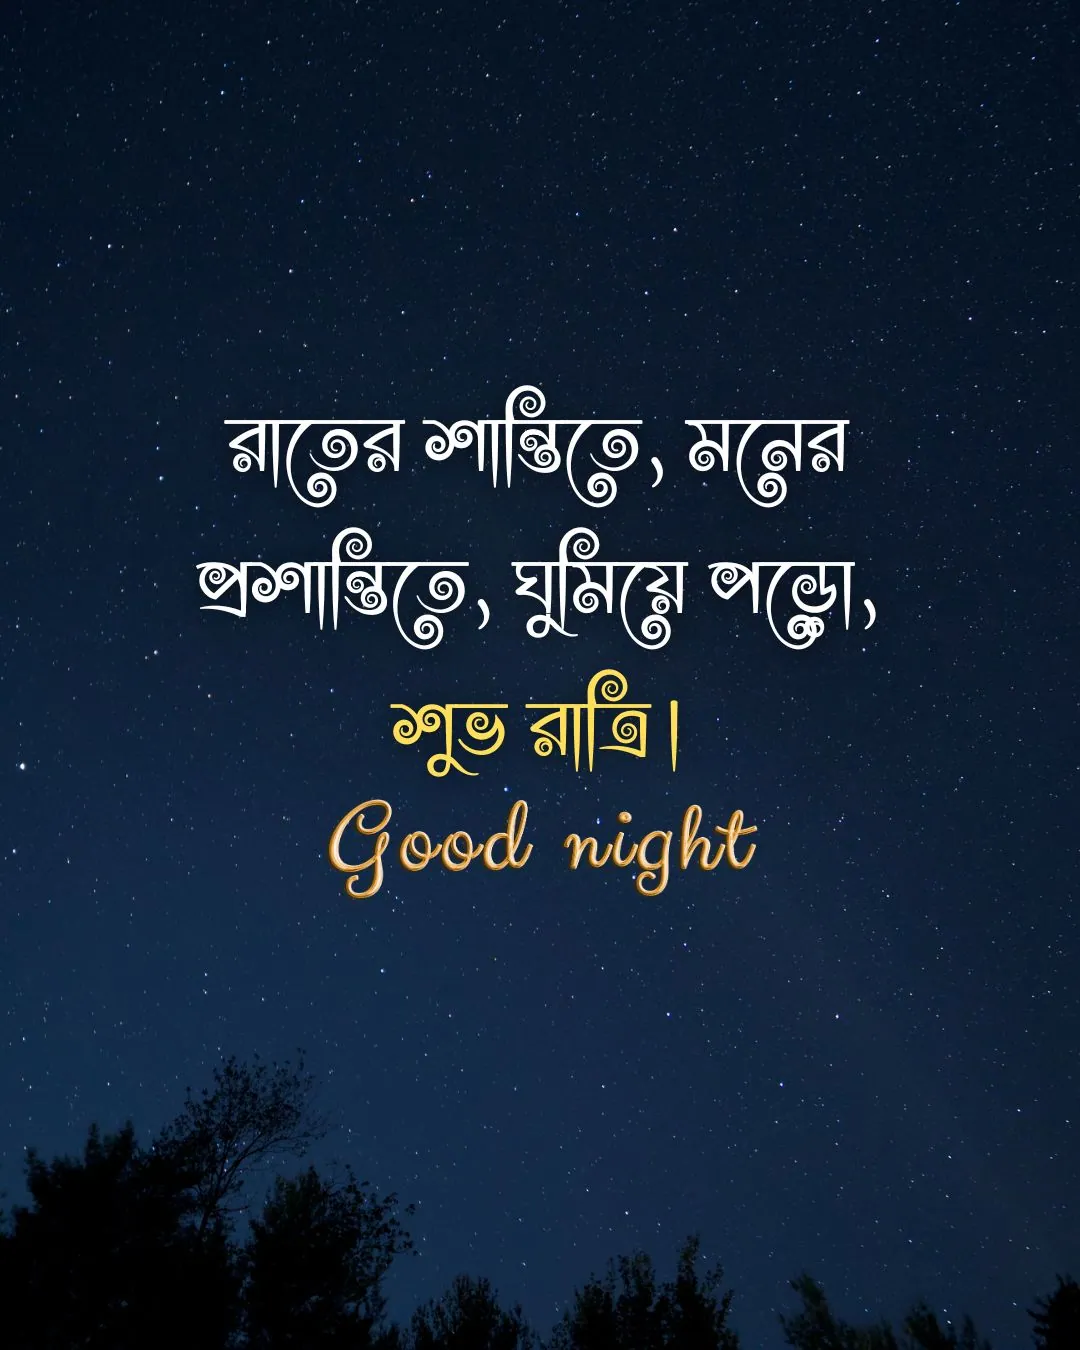 Good night in bengali - রাতের শান্তিতে, মনের প্রশান্তিতে, ঘুমিয়ে পড়ো, শুভ রাত্রি